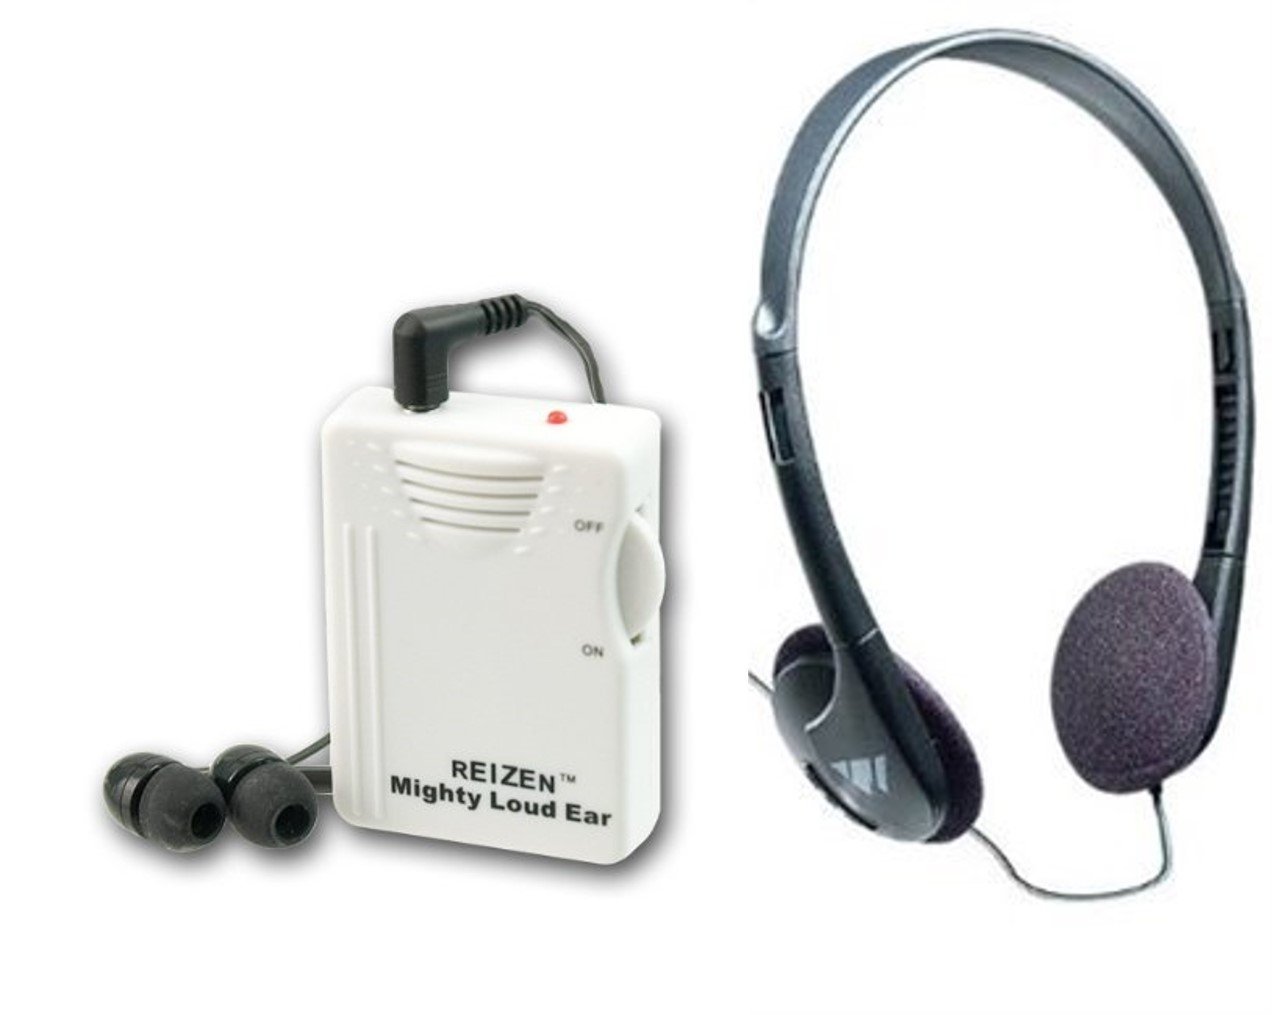 Reizen Mighty Loud Ear 120dB Personal Sound Hearing Amplifier with Earphones  and Extra Headphones - Walmart.com